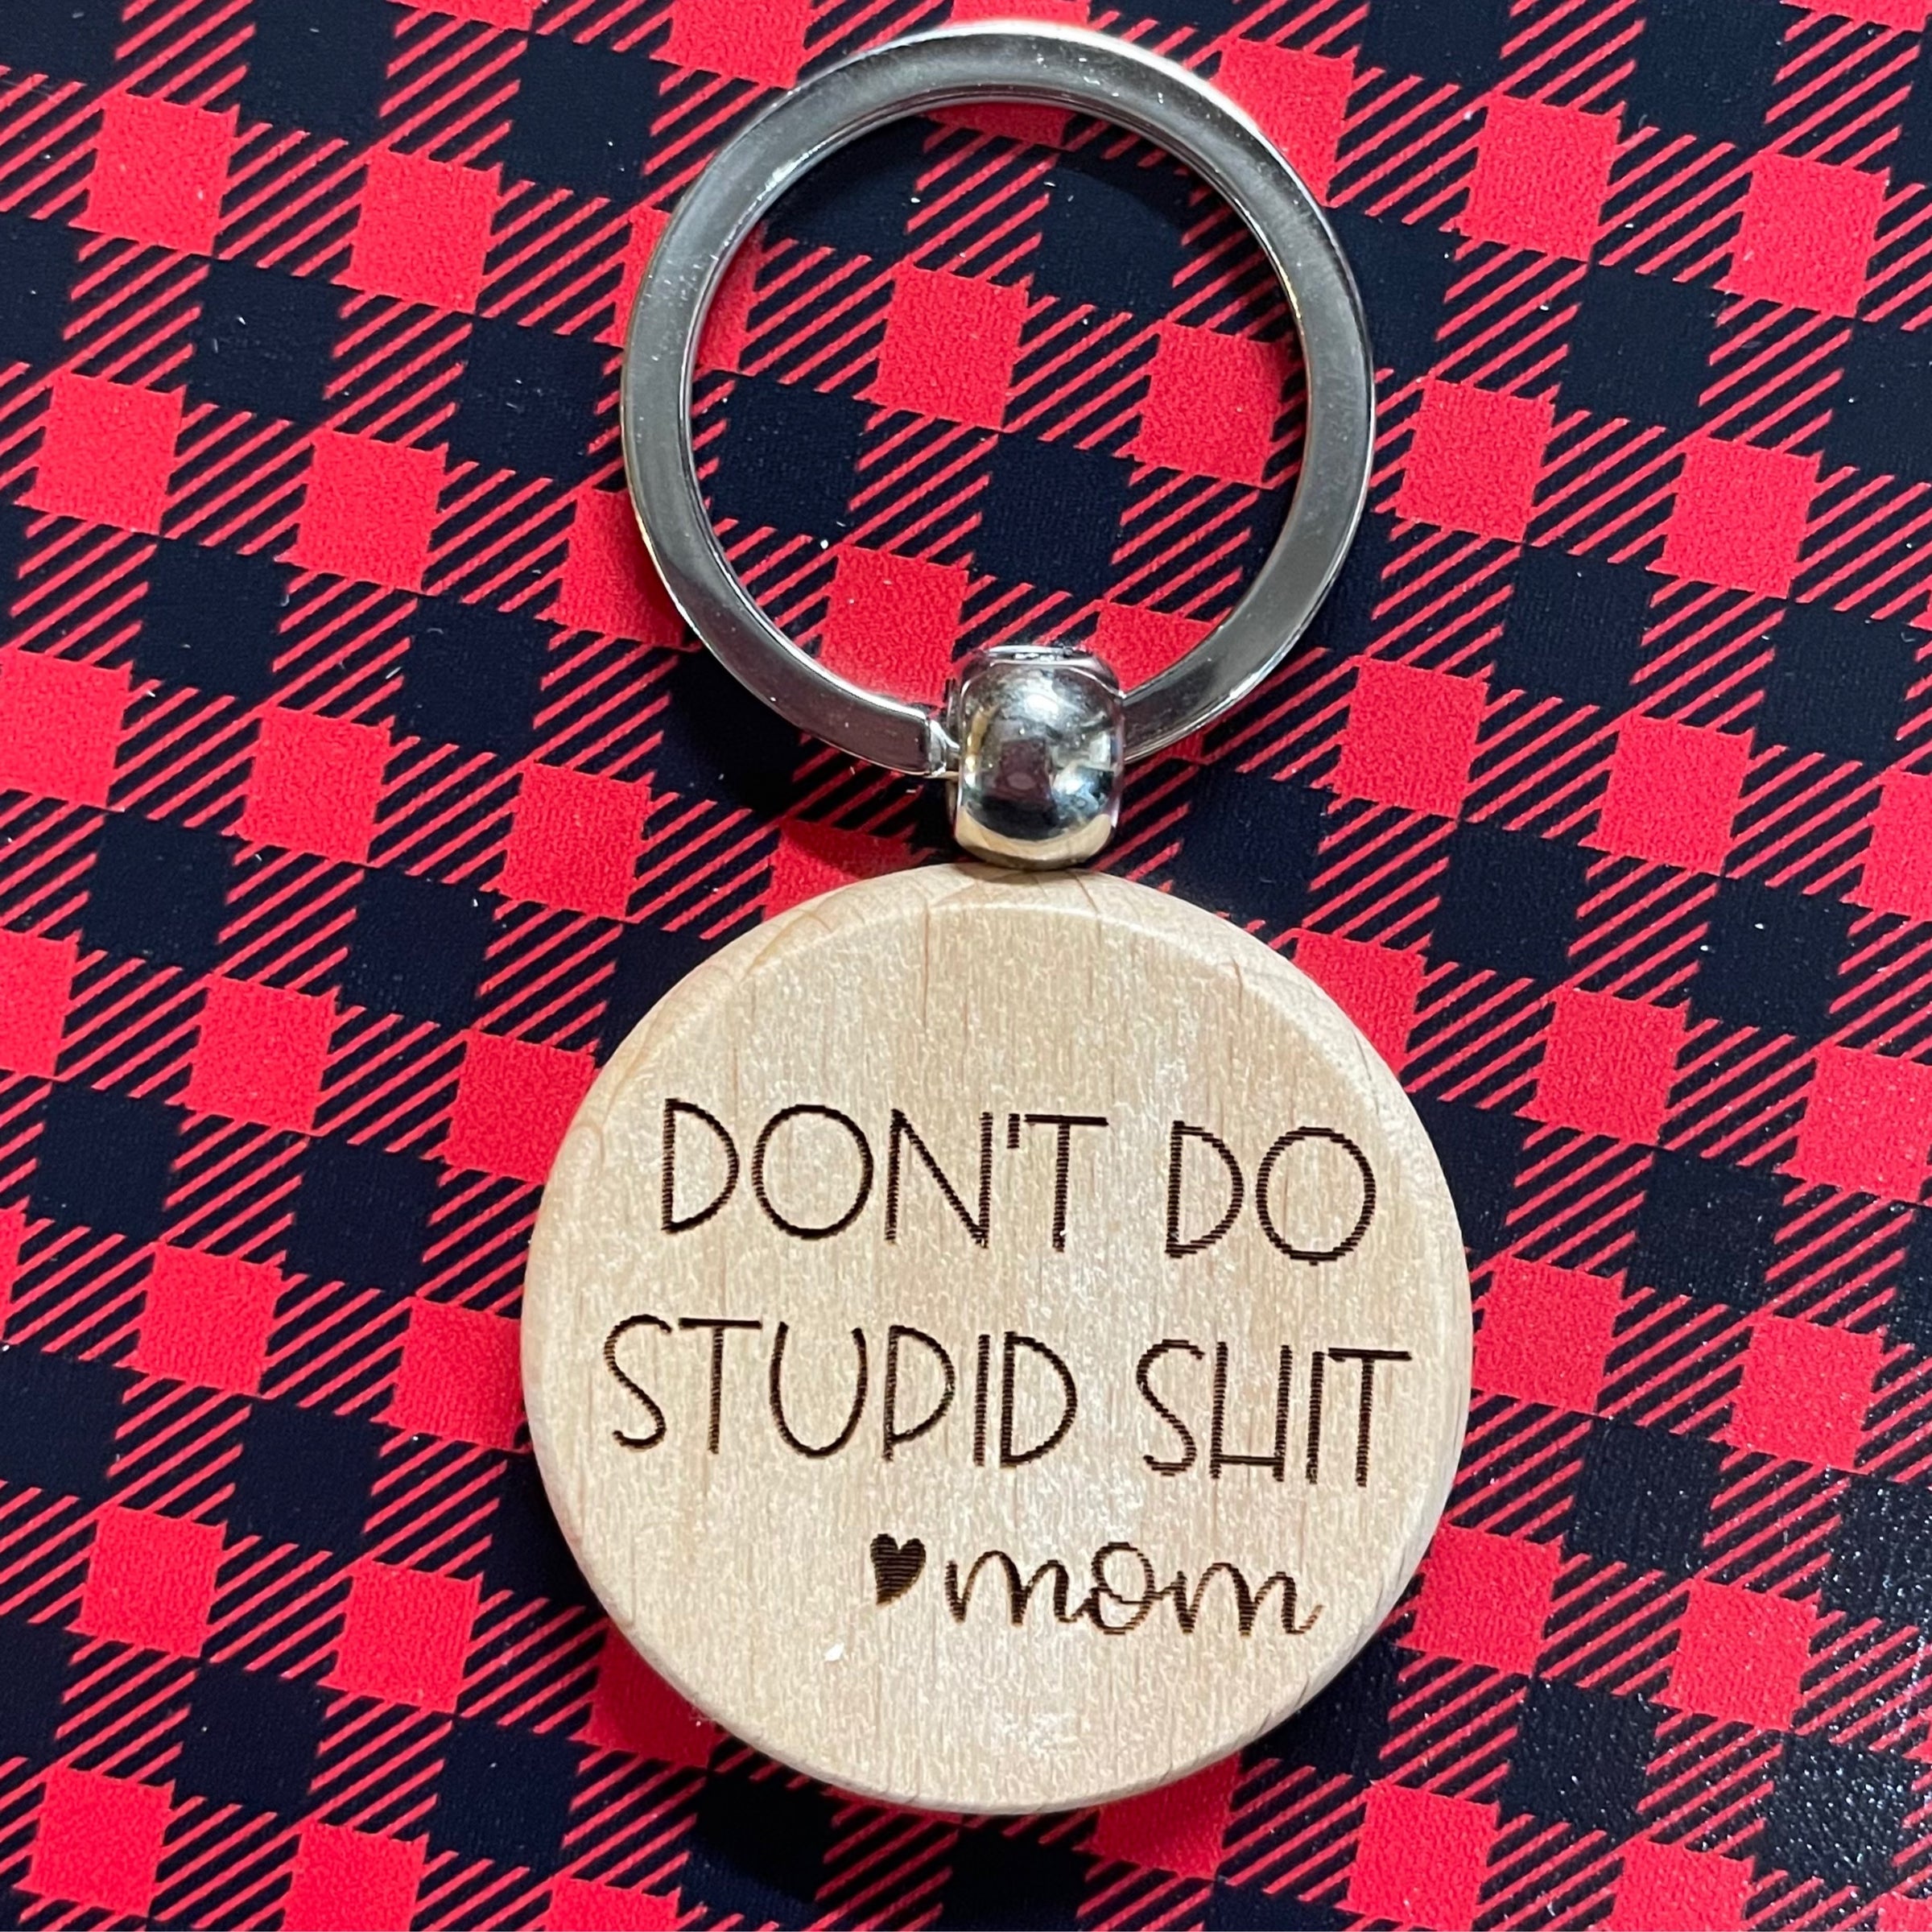 Don't Do Stupid SHIT keychain – Willow Street Designs, LLC